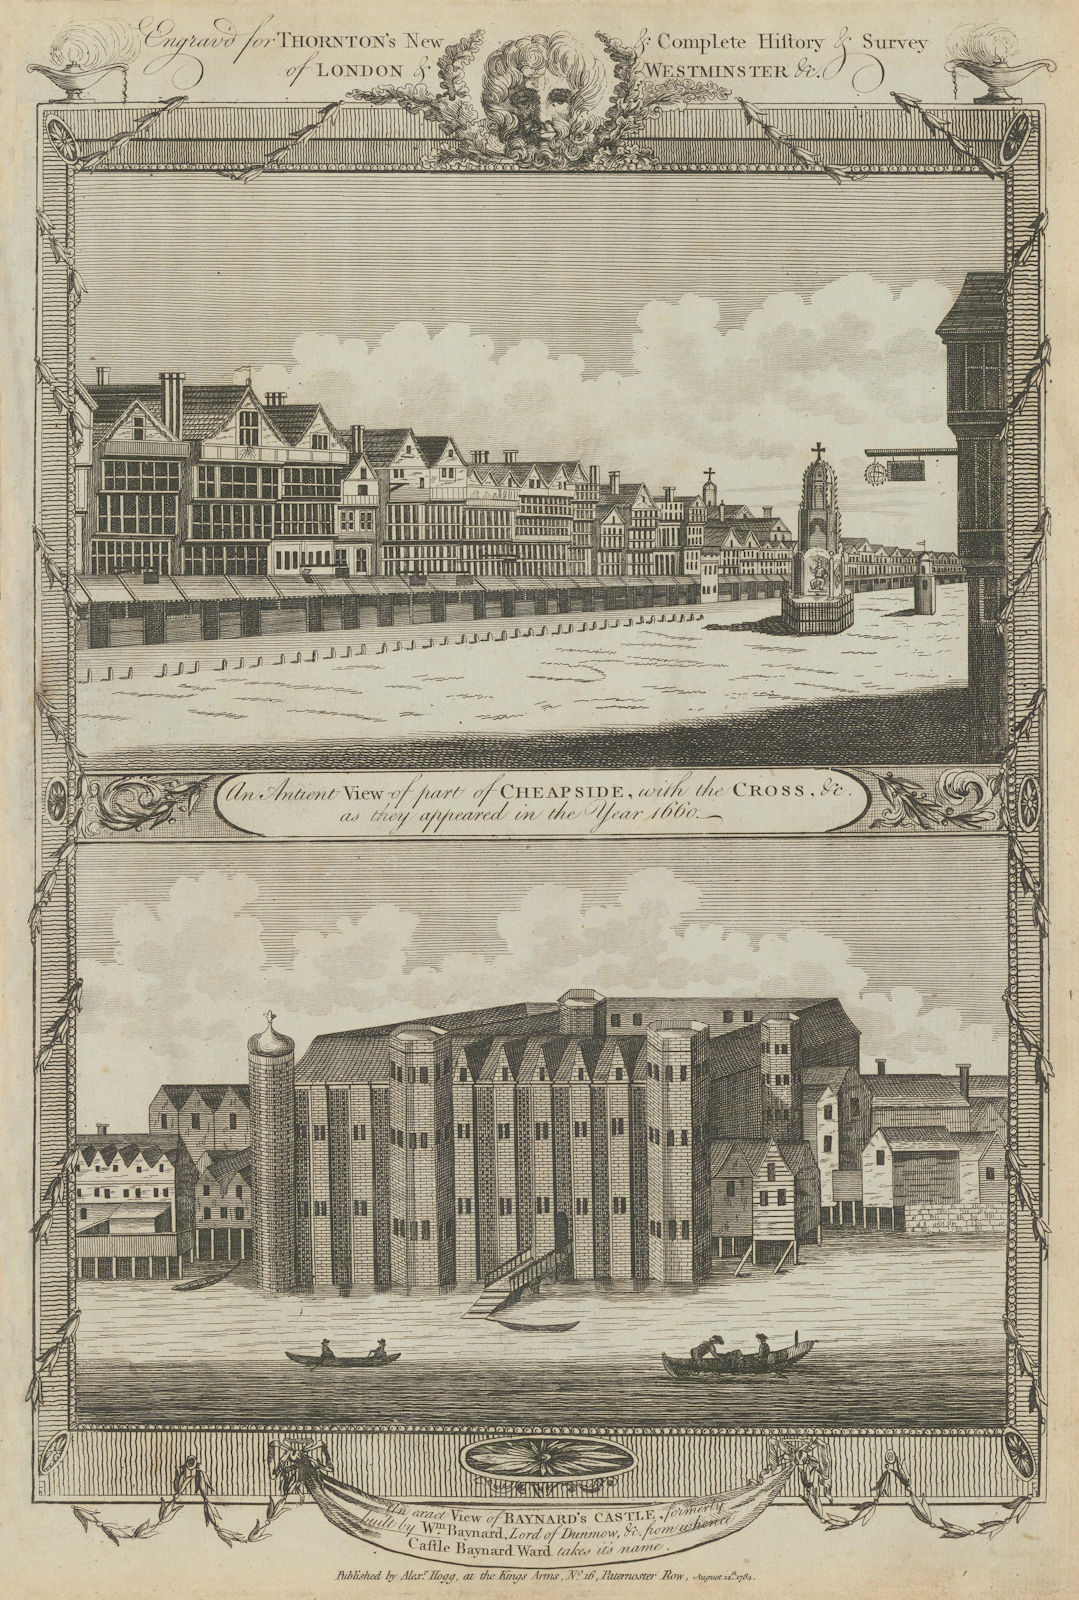 Cheapside in 1660. Baynard’s Castle, Blackfriars. City of London. THORNTON 1784